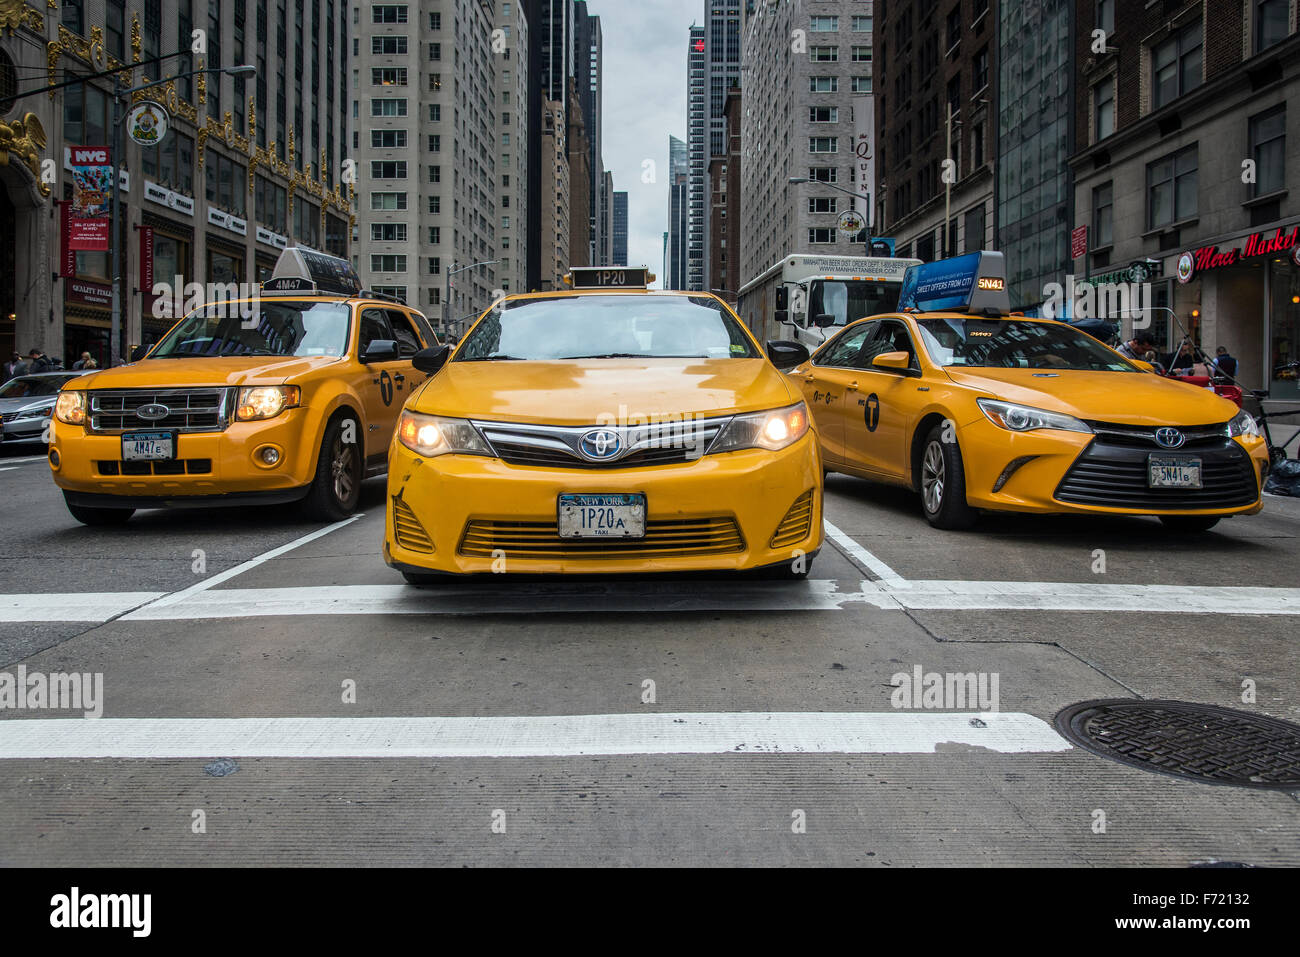 Taxi cabs, Manhattan, New York, USA Stock Photo